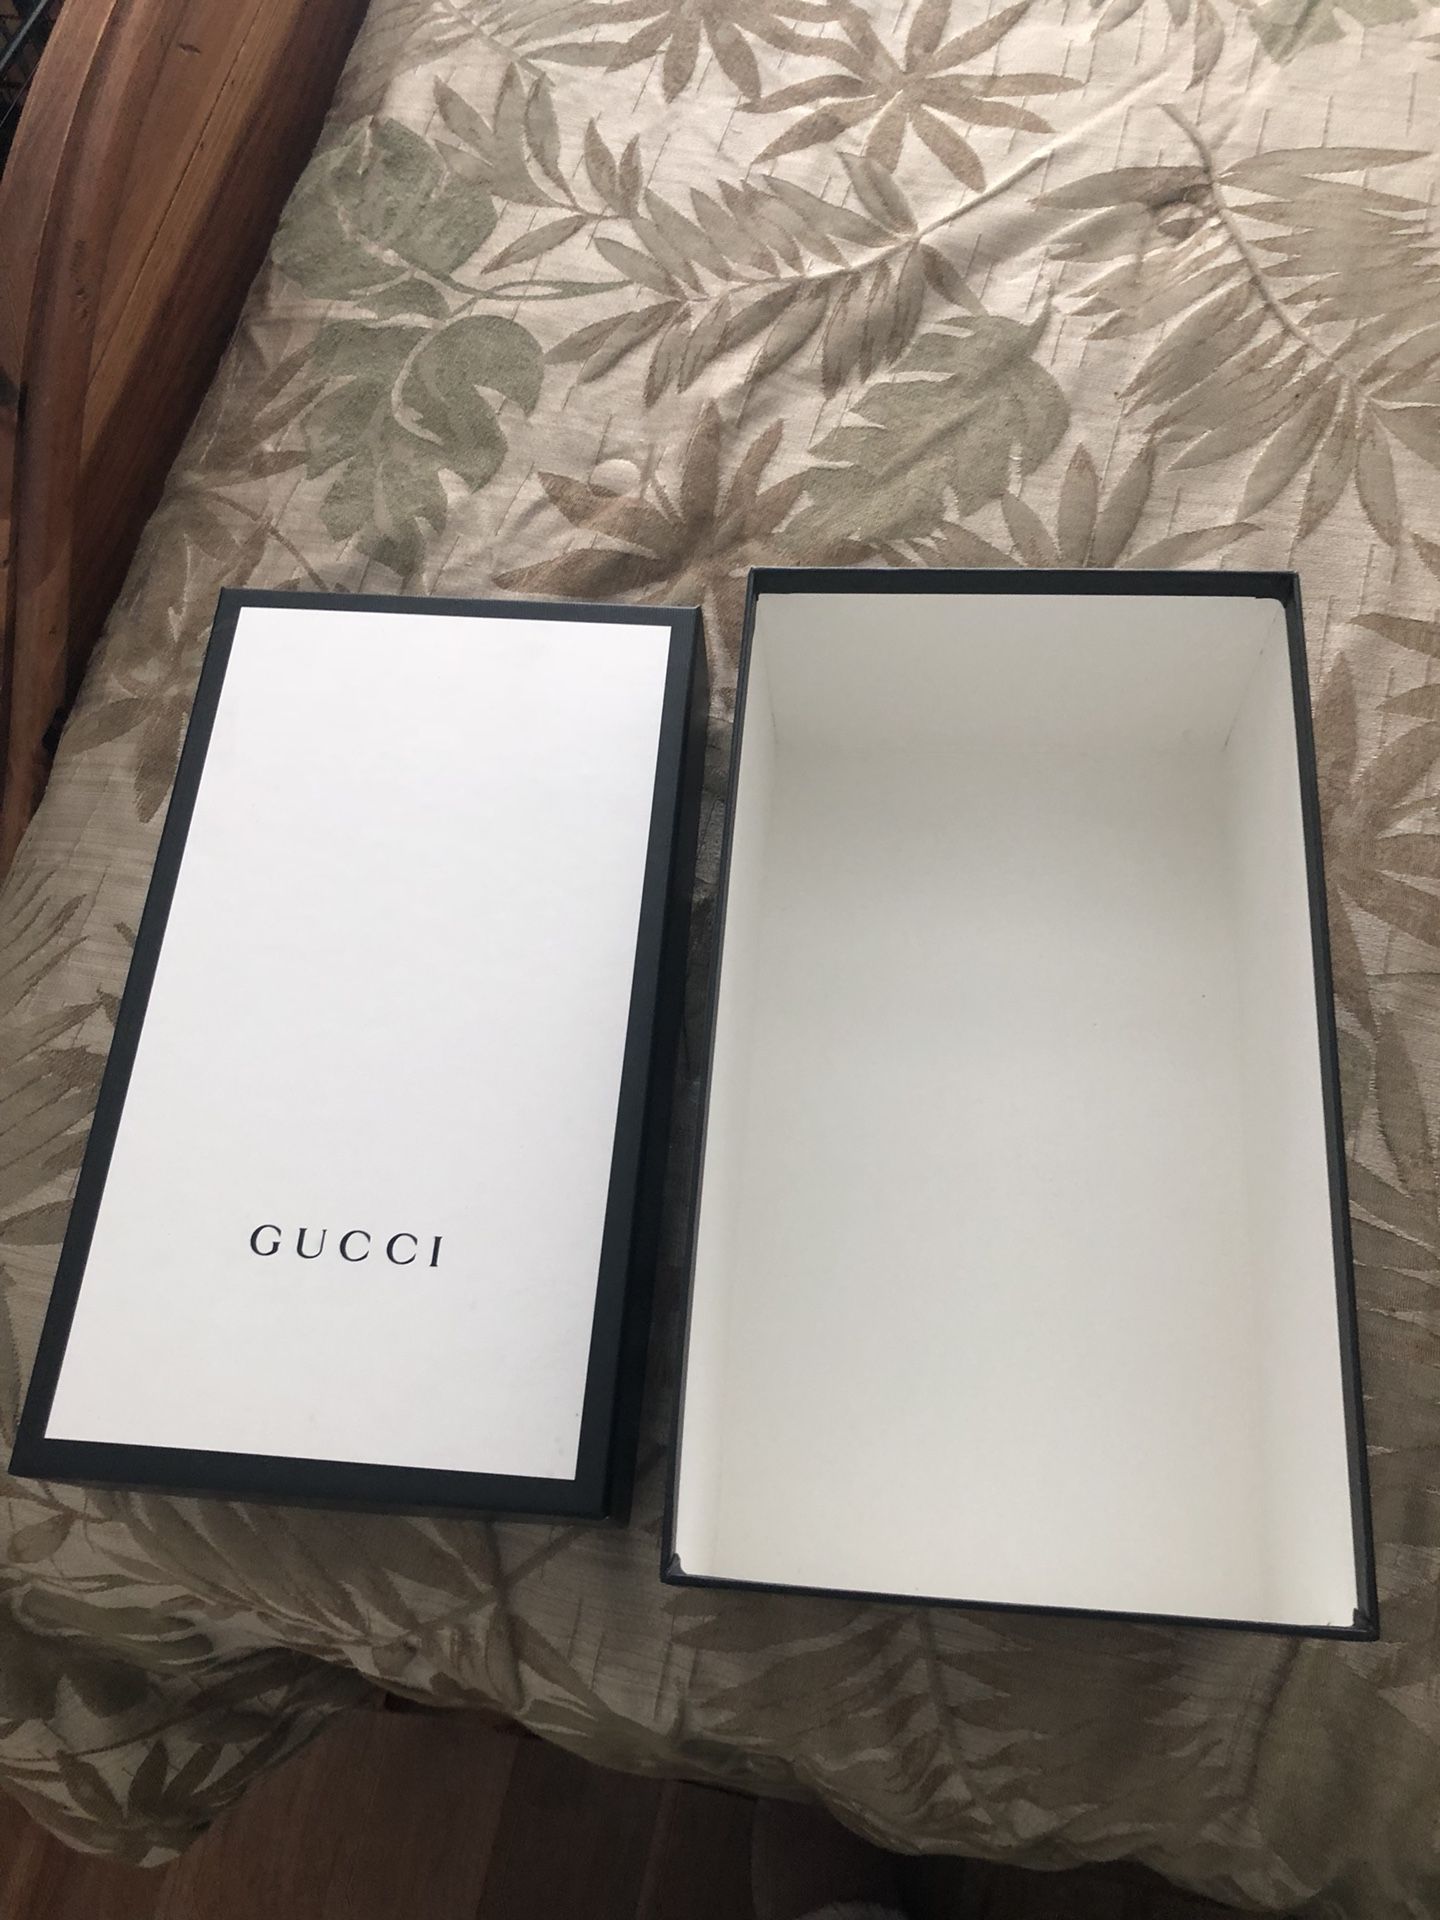 Authentic Gucci shoe box